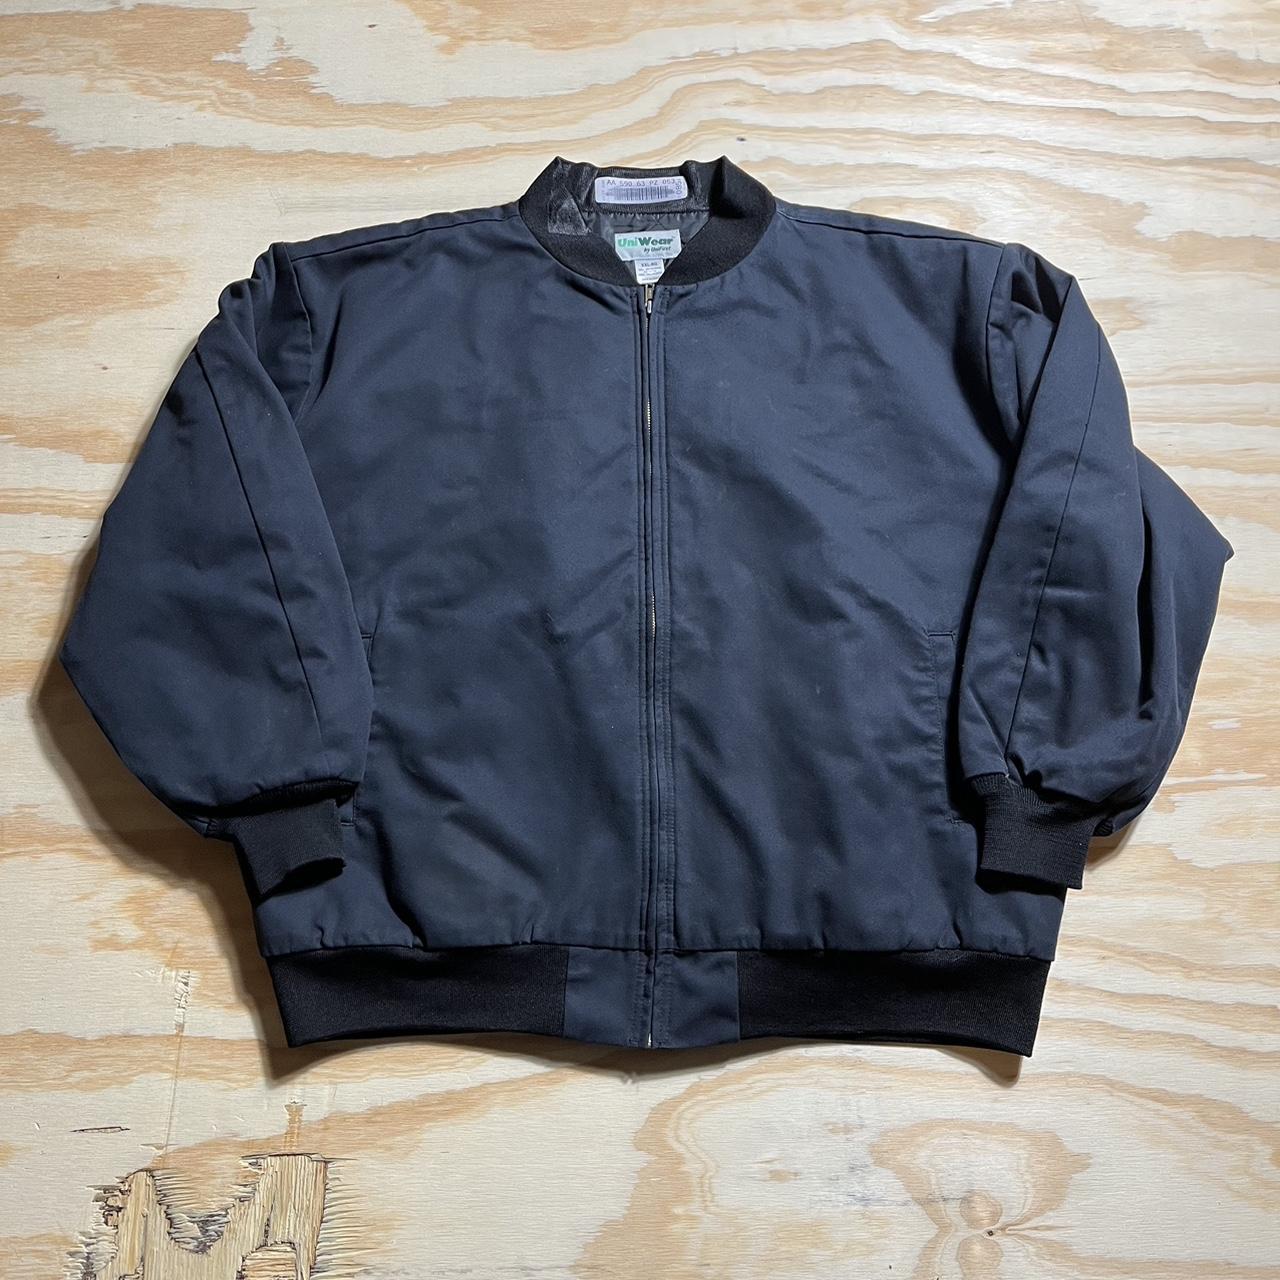 Vintage Uniwear bomber jacket size 2xl in good... - Depop